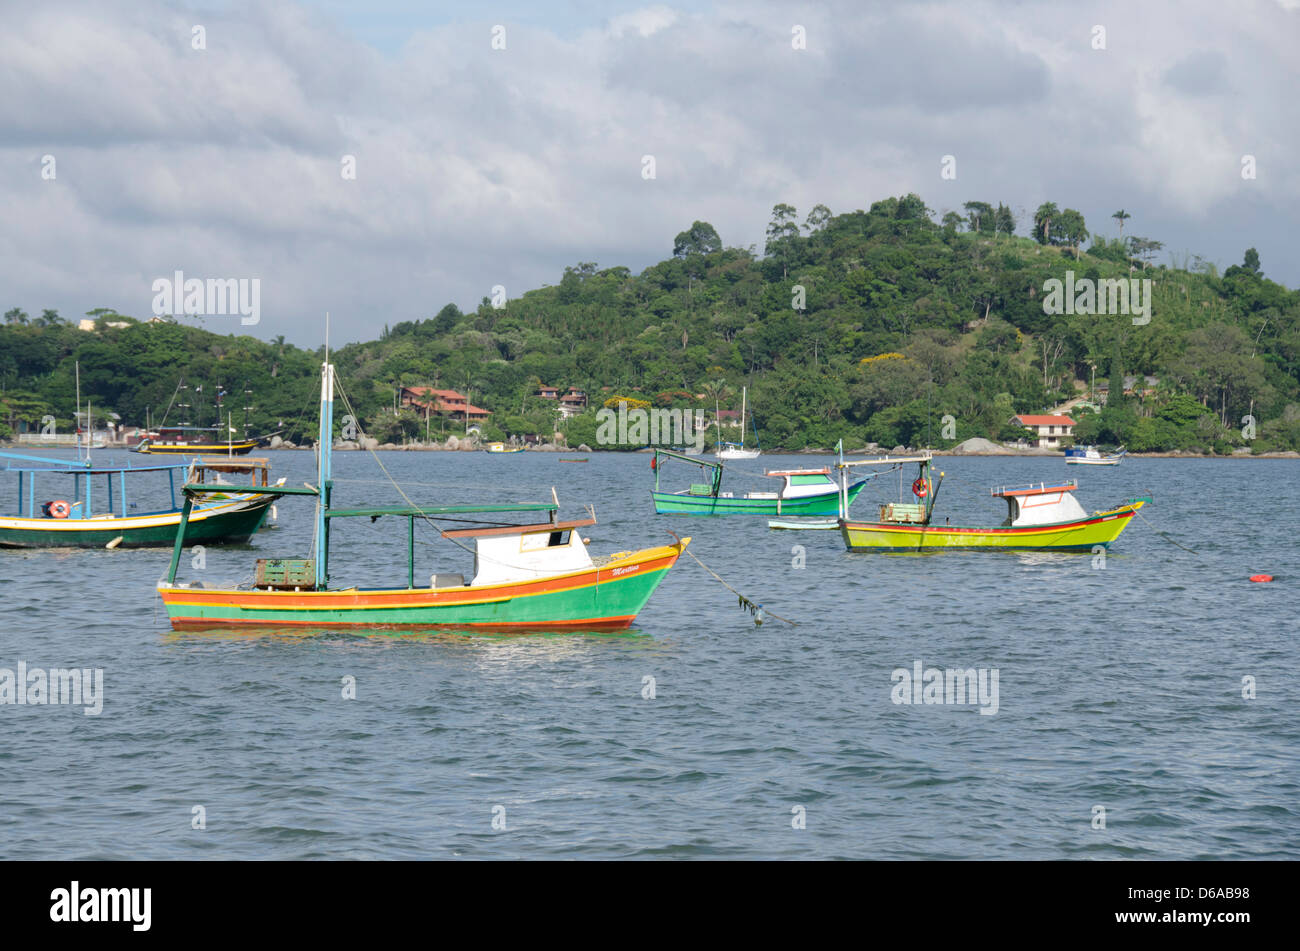 Brazil, state of Santa Catarina, Porto Belo. Colorful local fishing boats in the port area. Stock Photo